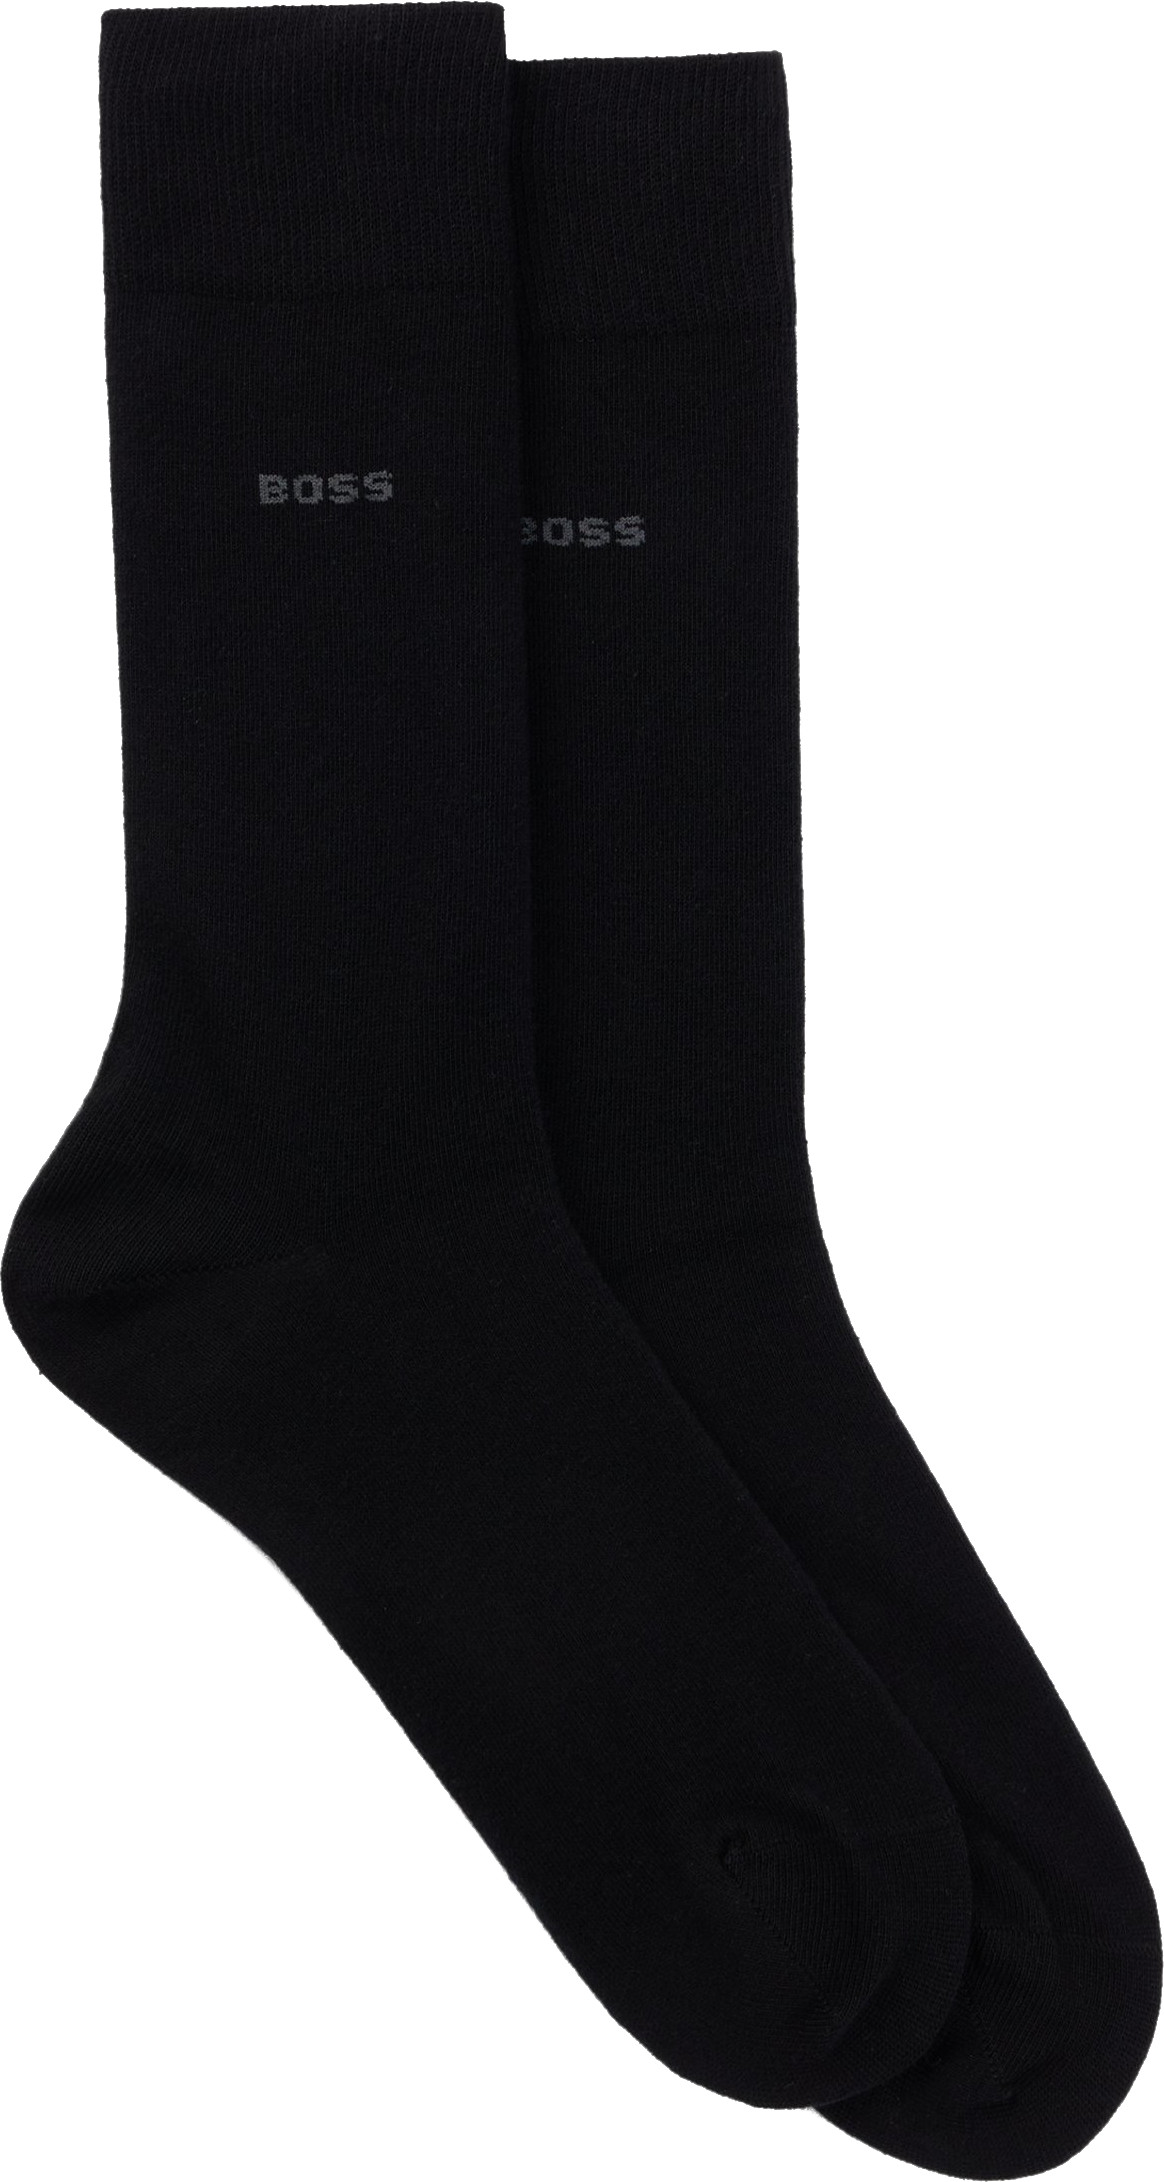 Hugo Boss 2 PACK - pánske ponožky BOSS 50516616-001 39-42